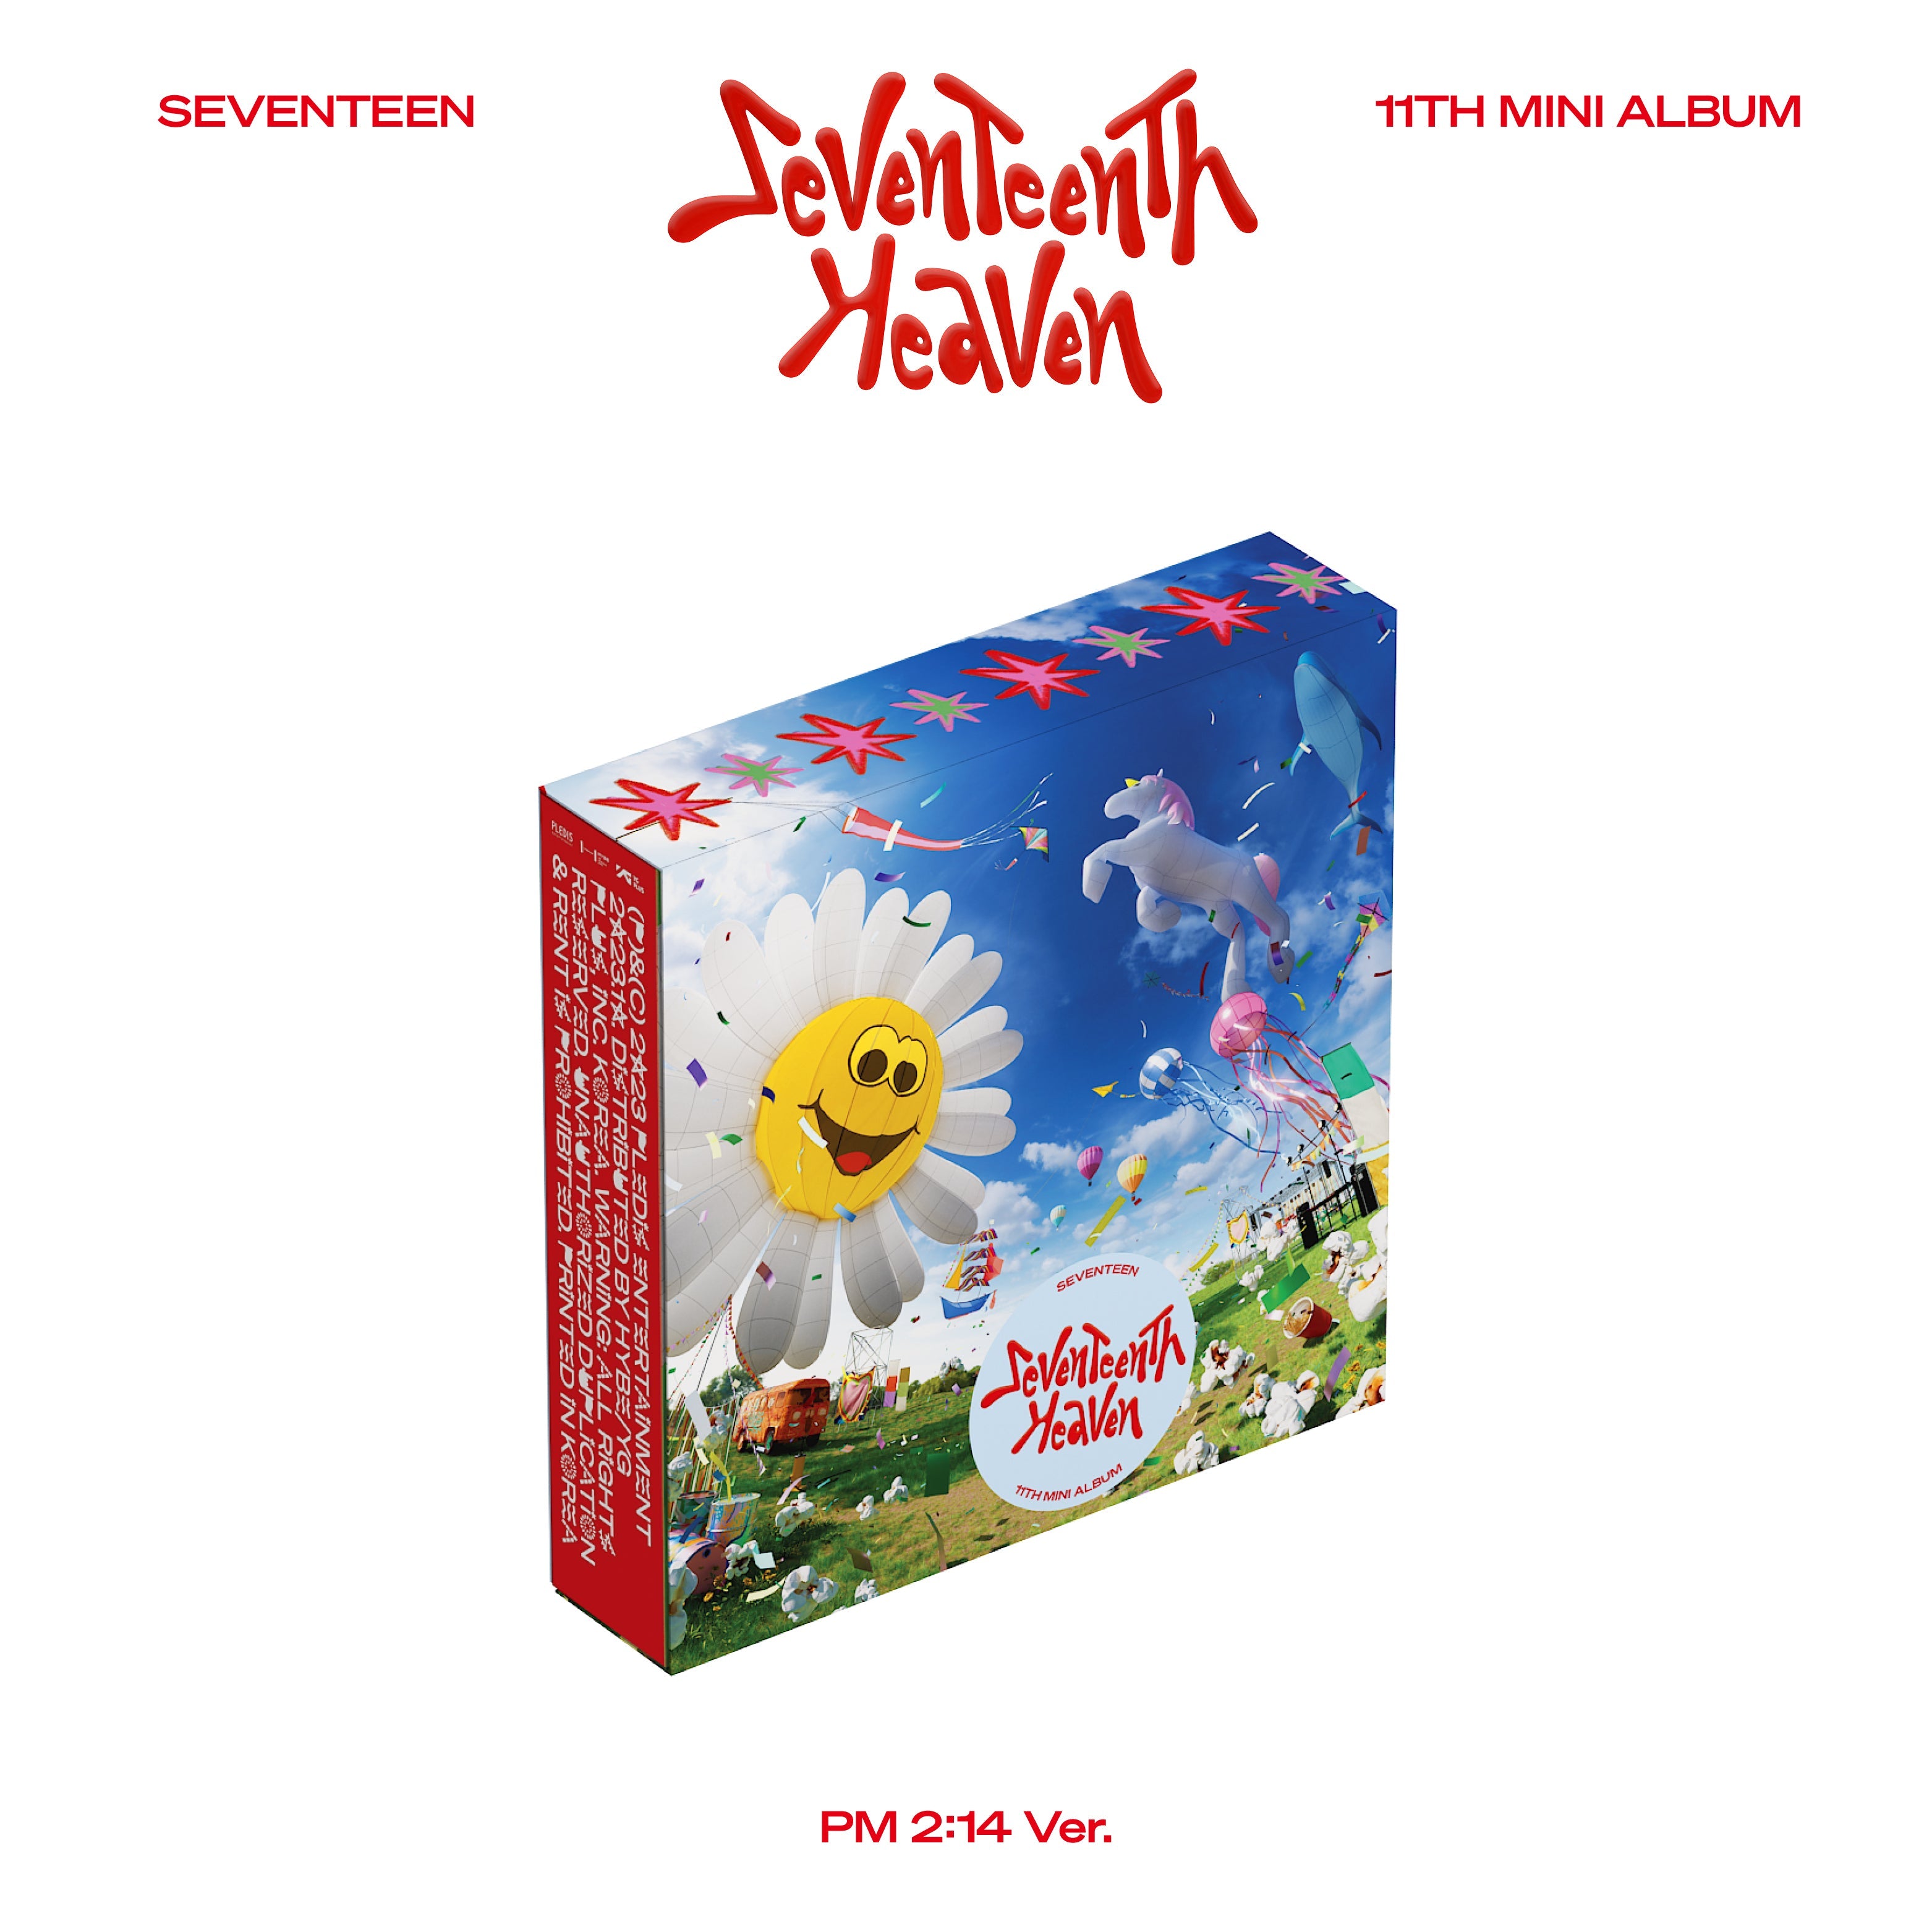 SEVENTEEN 11th Mini Album 'SEVENTEENTH HEAVEN' PM 2:14 Ver 